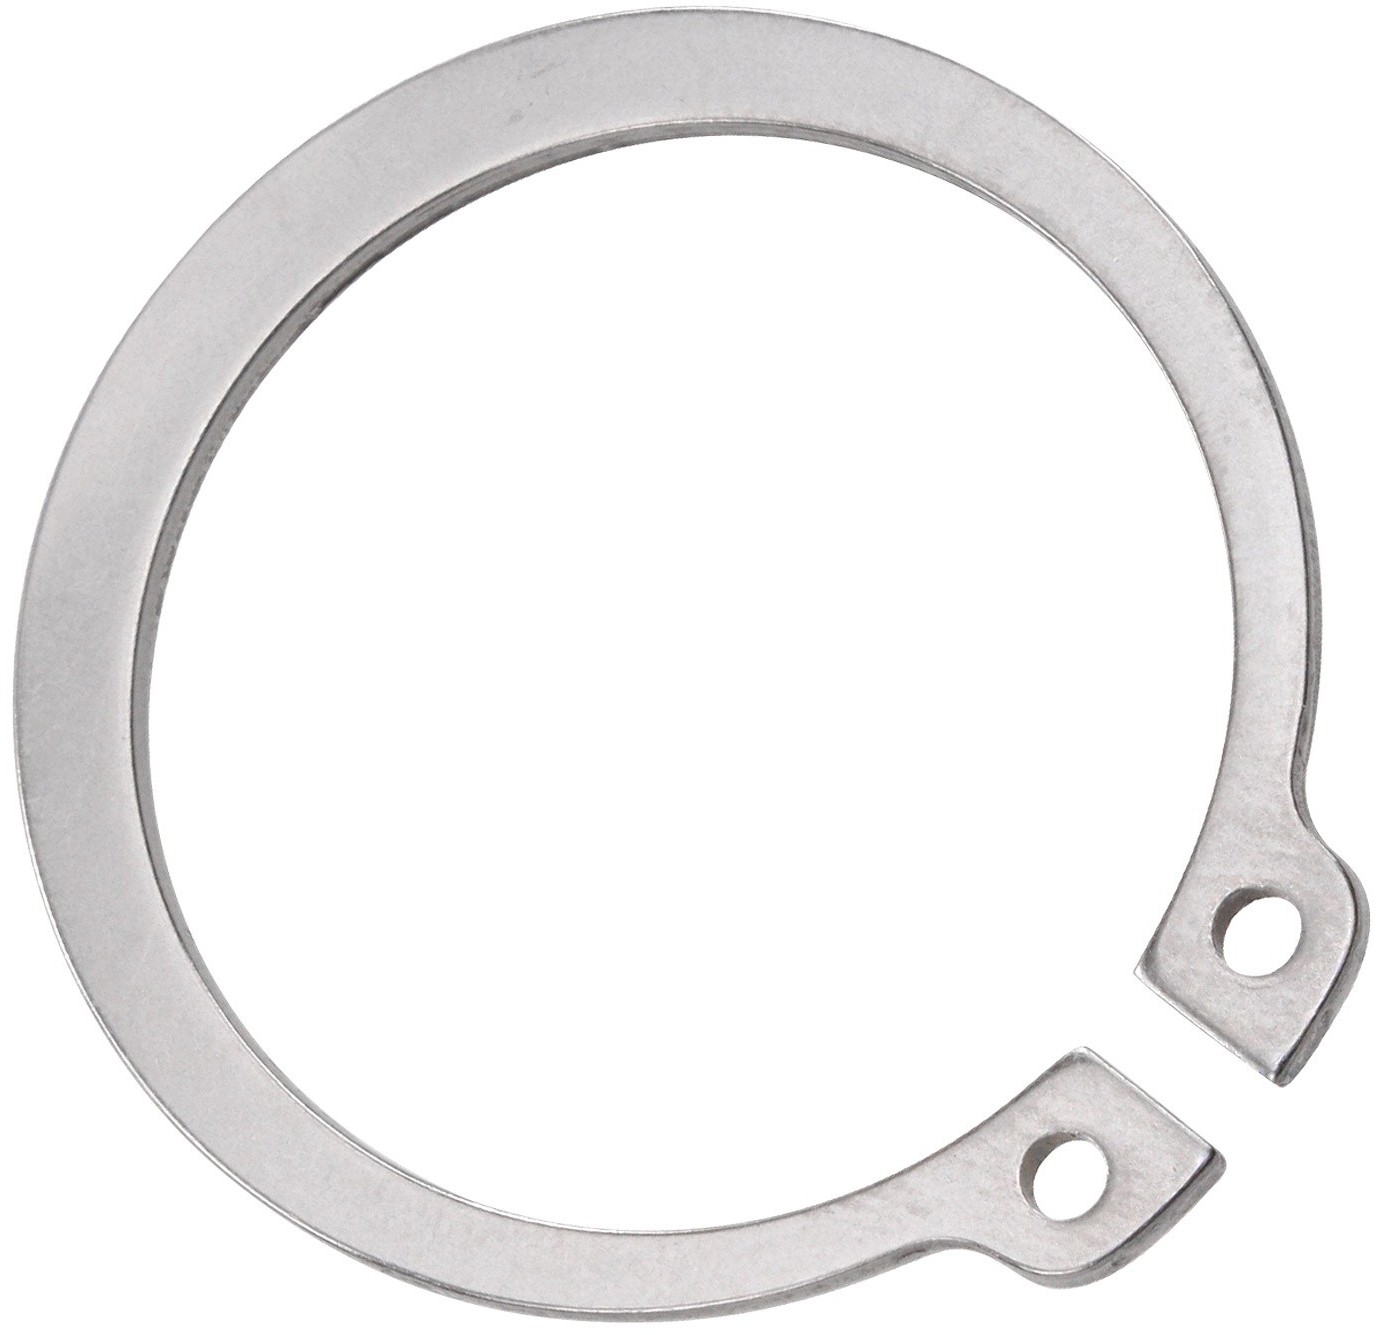 Кольцо стопорное наружное 23х1,2 DIN 471, нержавеющая сталь 1.4122 (А2) - фото